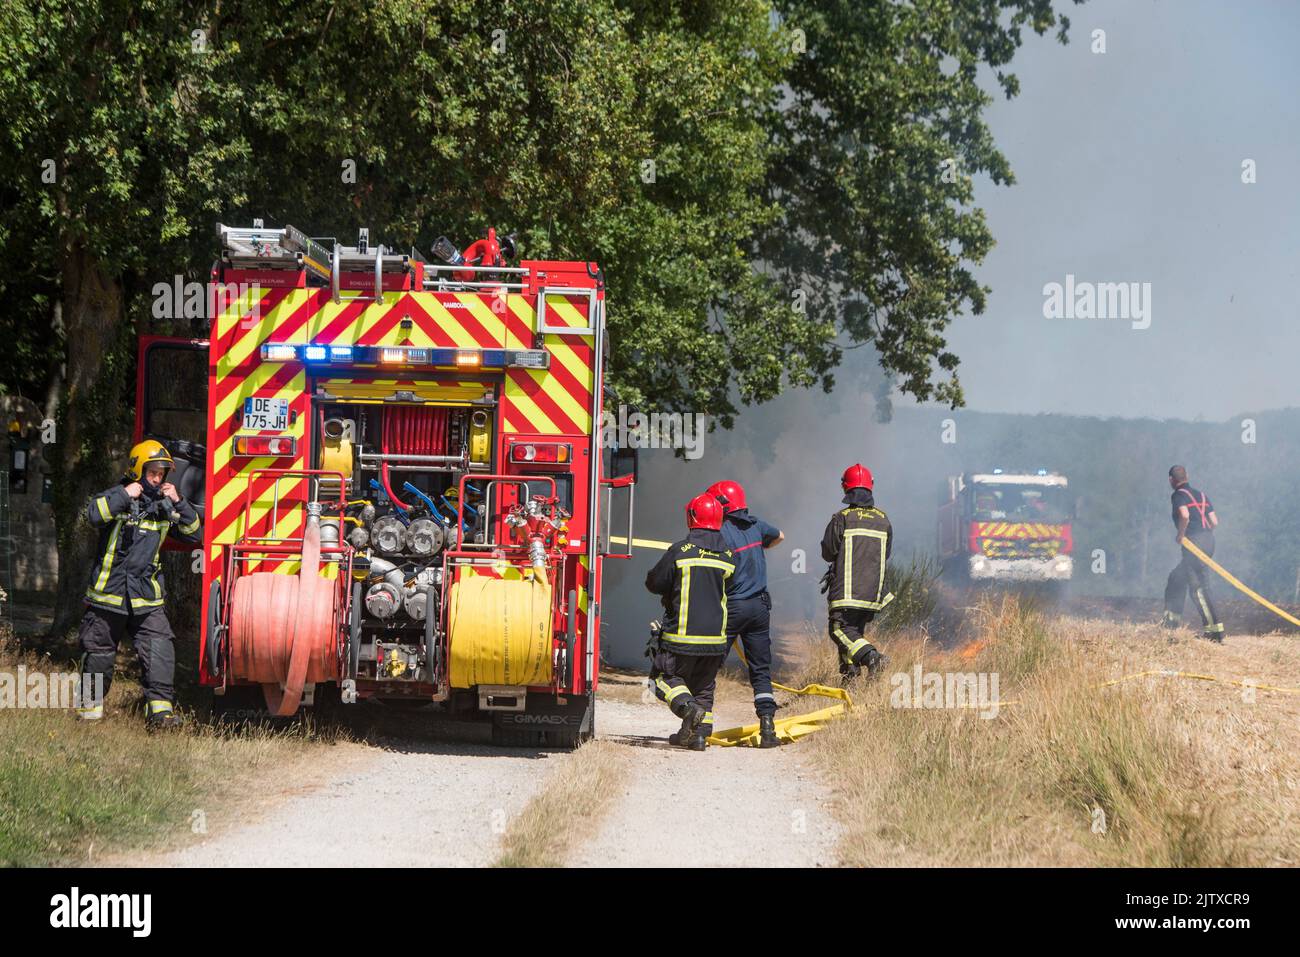 Firefighters extinguishing a stubble fire in a field already harvested, Eure-et-Loir department, Centre-Val-de-Loire region, France, Europe. Stock Photo